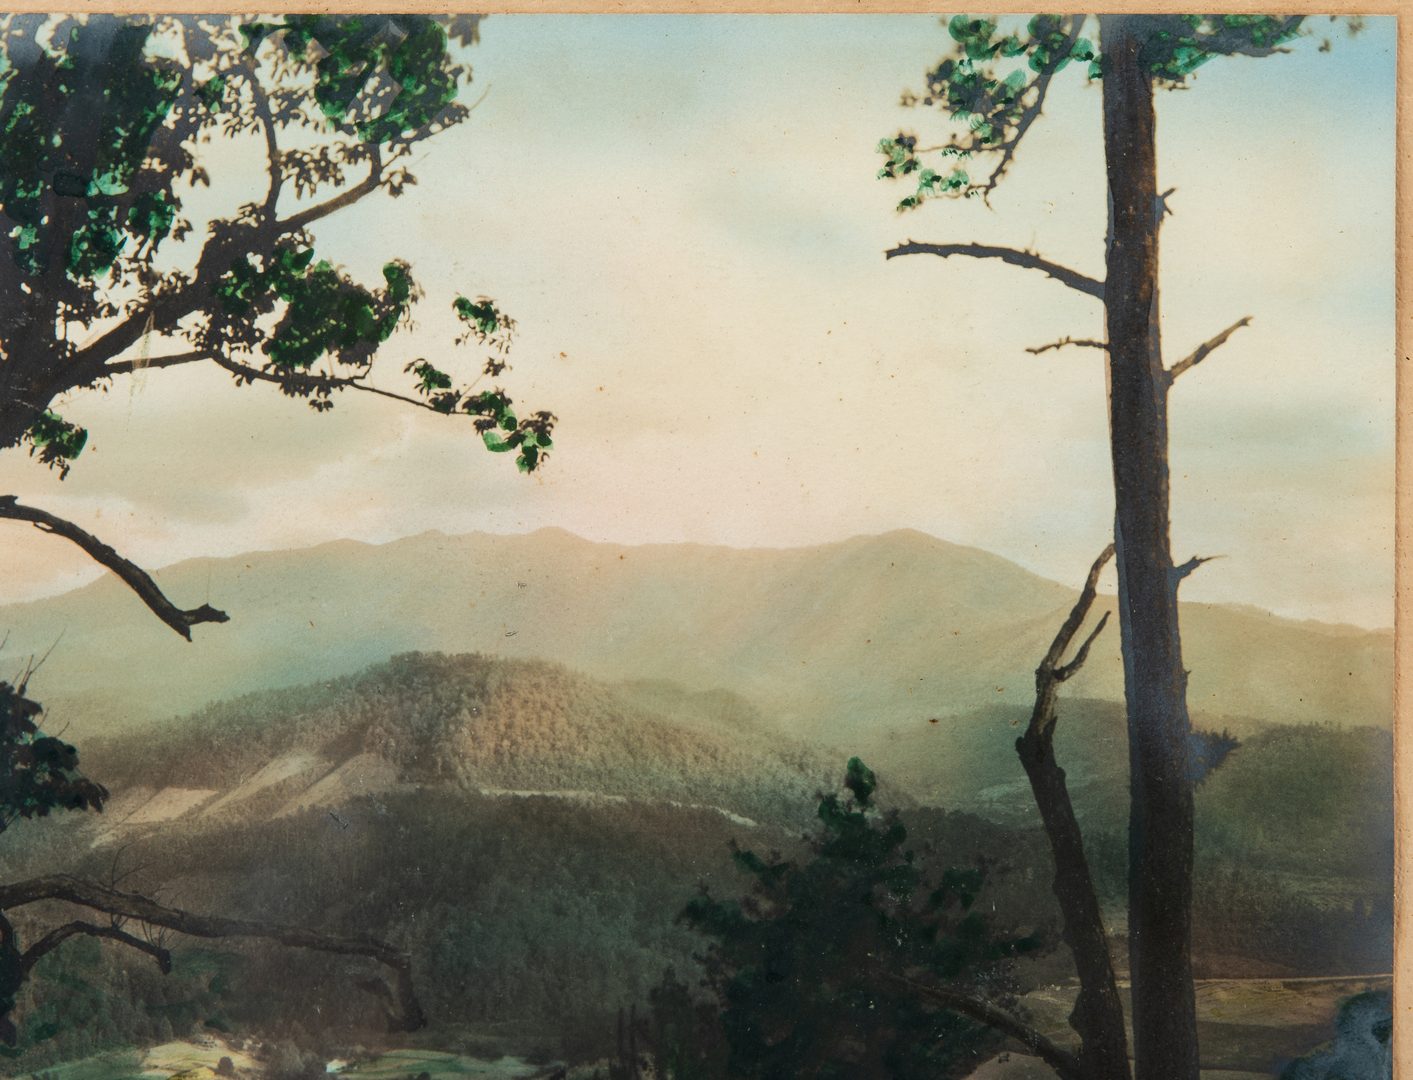 Lot 93: Jim Gray TN Watercolor & Knaffel/Thompson Mt. LeConte Photo, 2 items